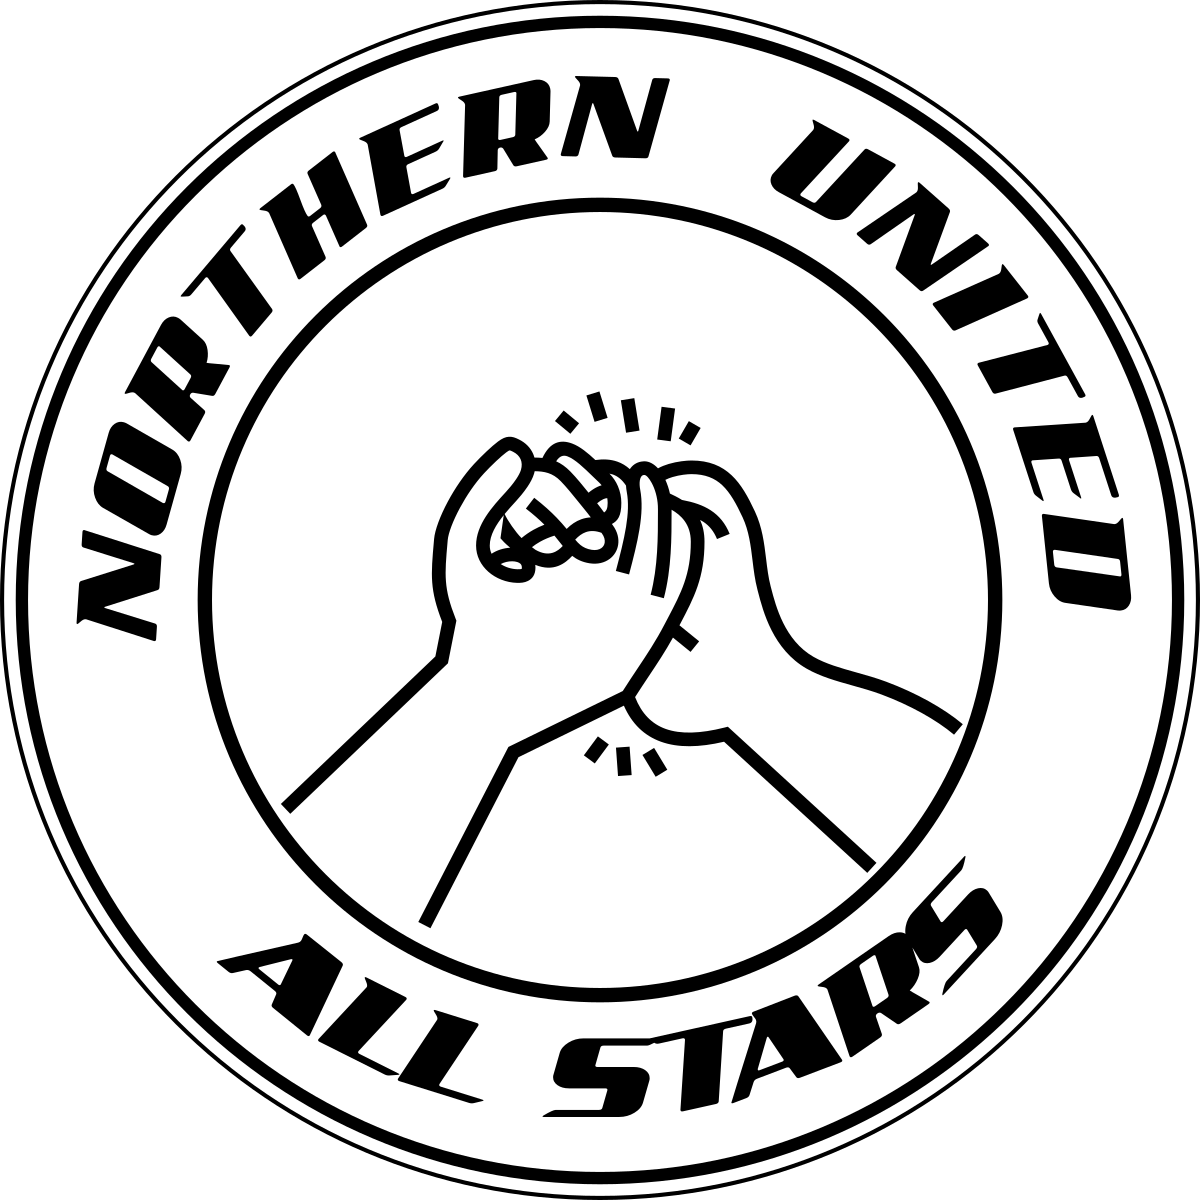 北方联全明星 logo